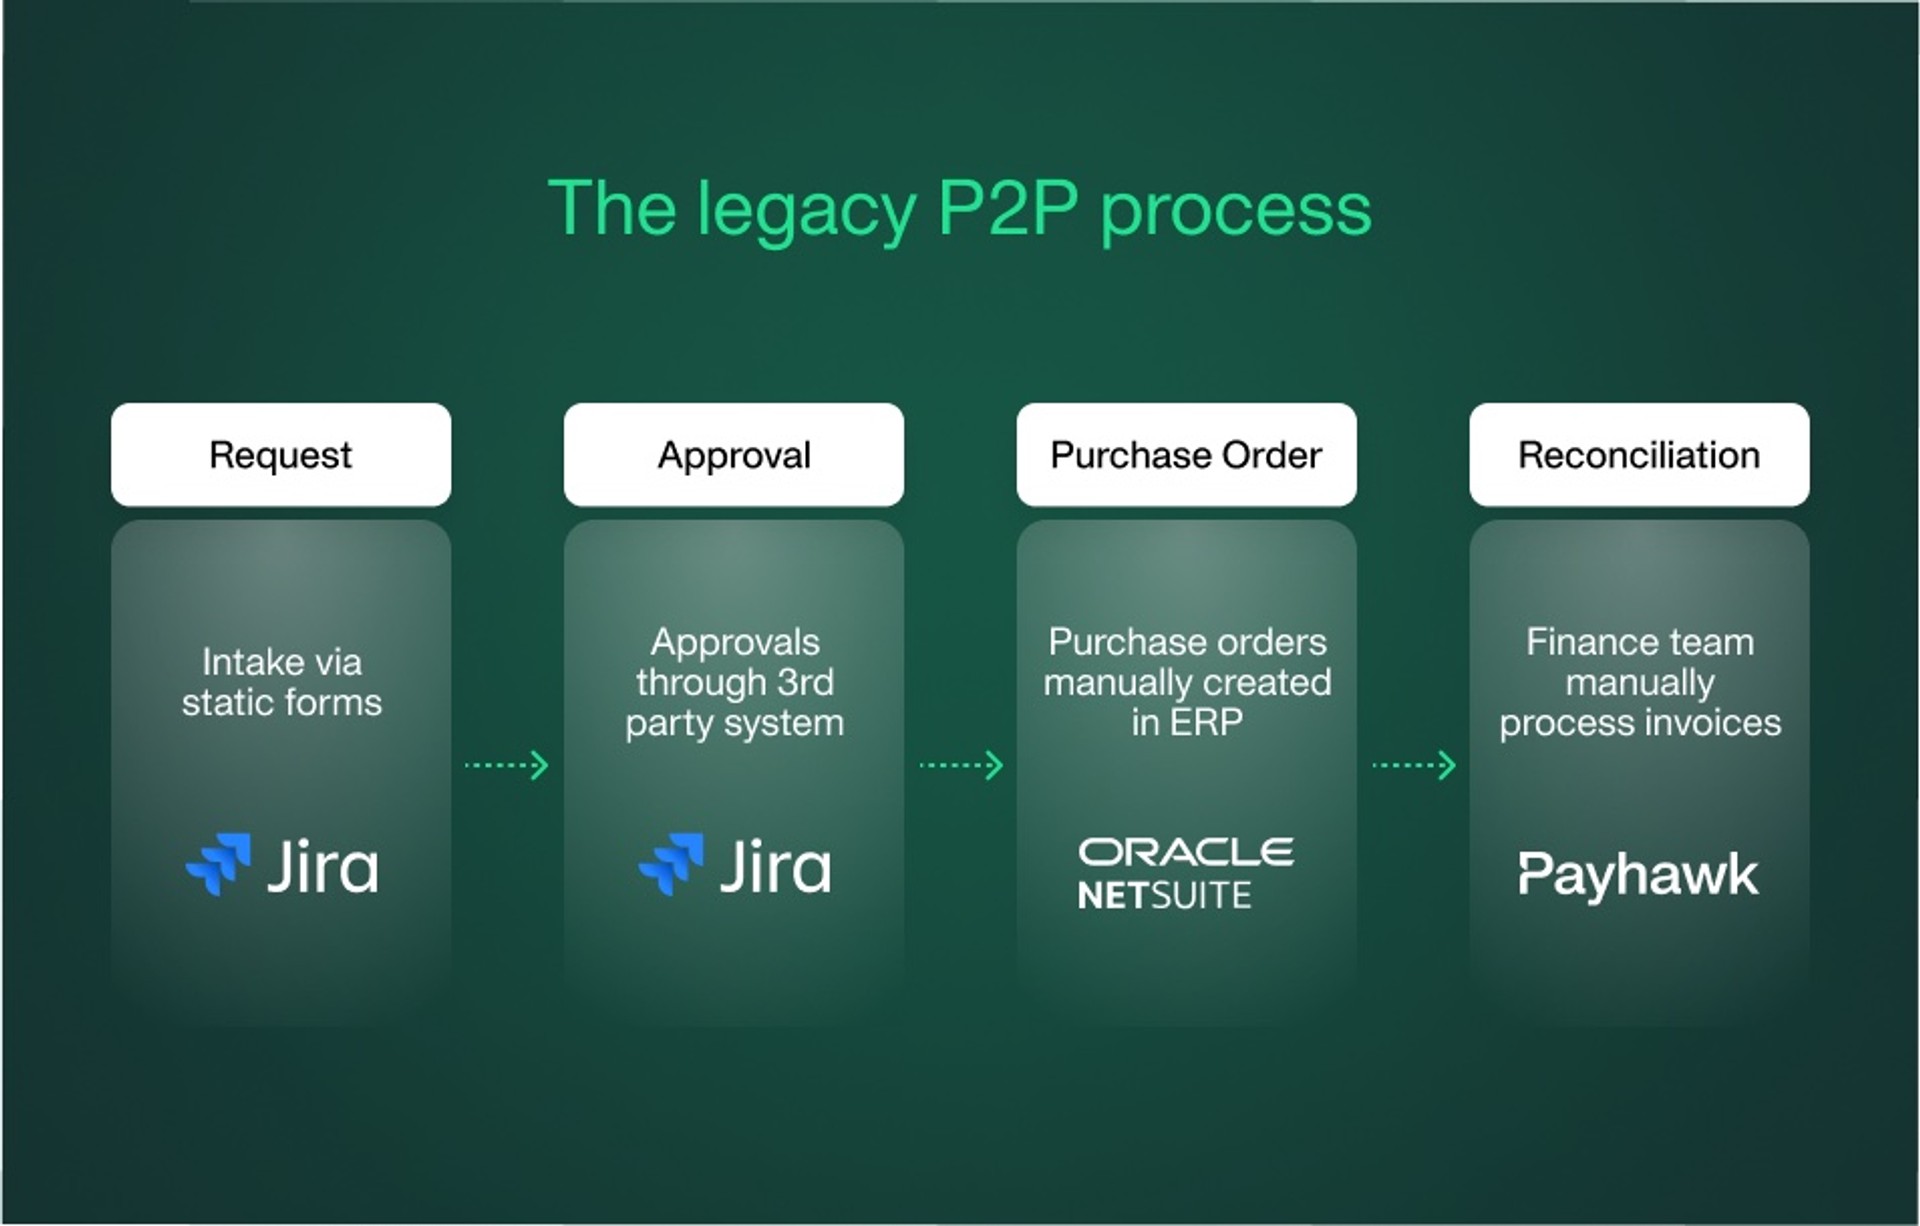 The legacy P2P process